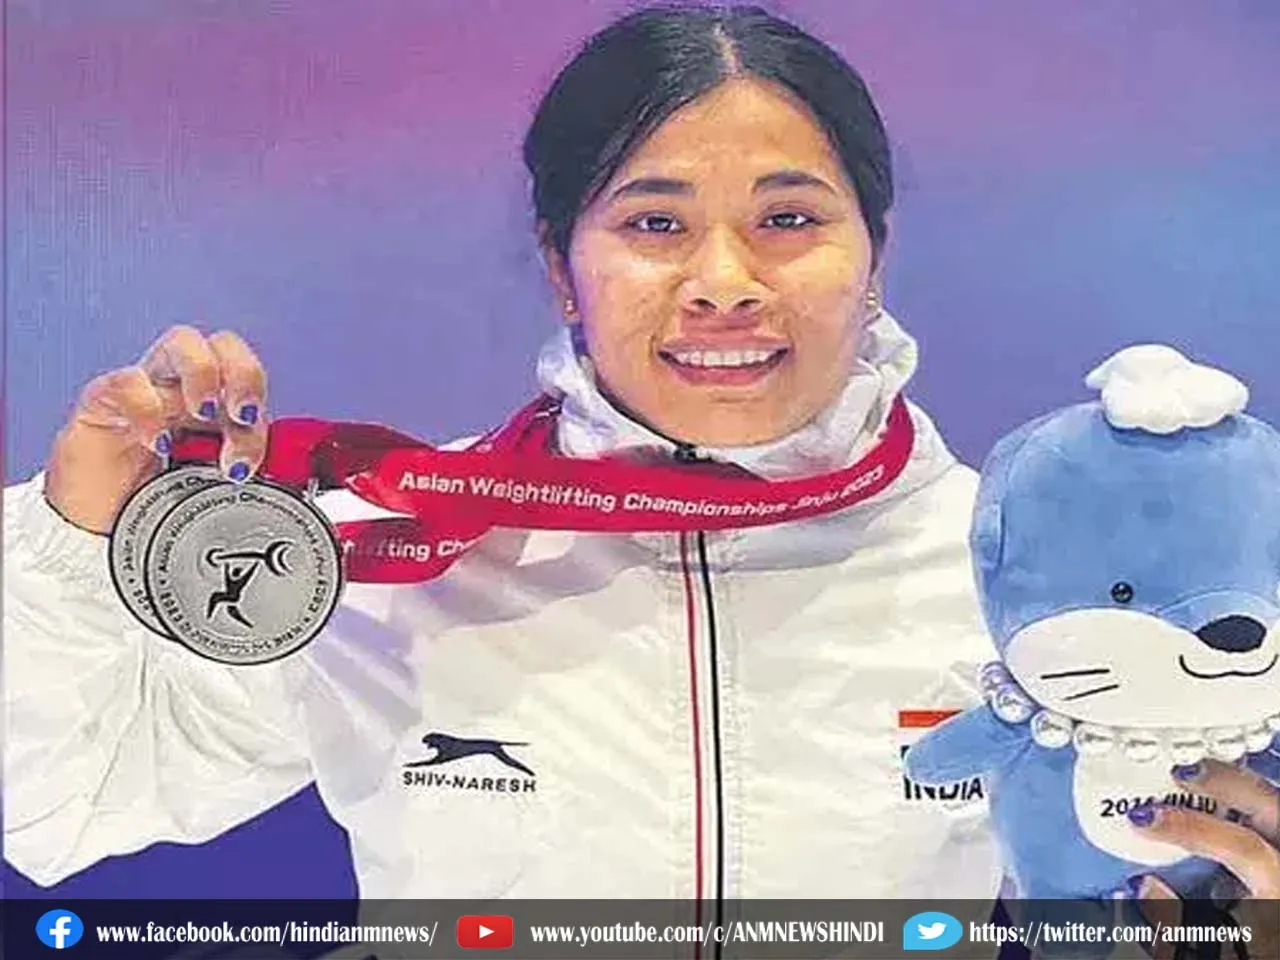 Weightlifting Championship : एशियन वेटलिफ्टिंग चैंपियनशिप जीती भारत